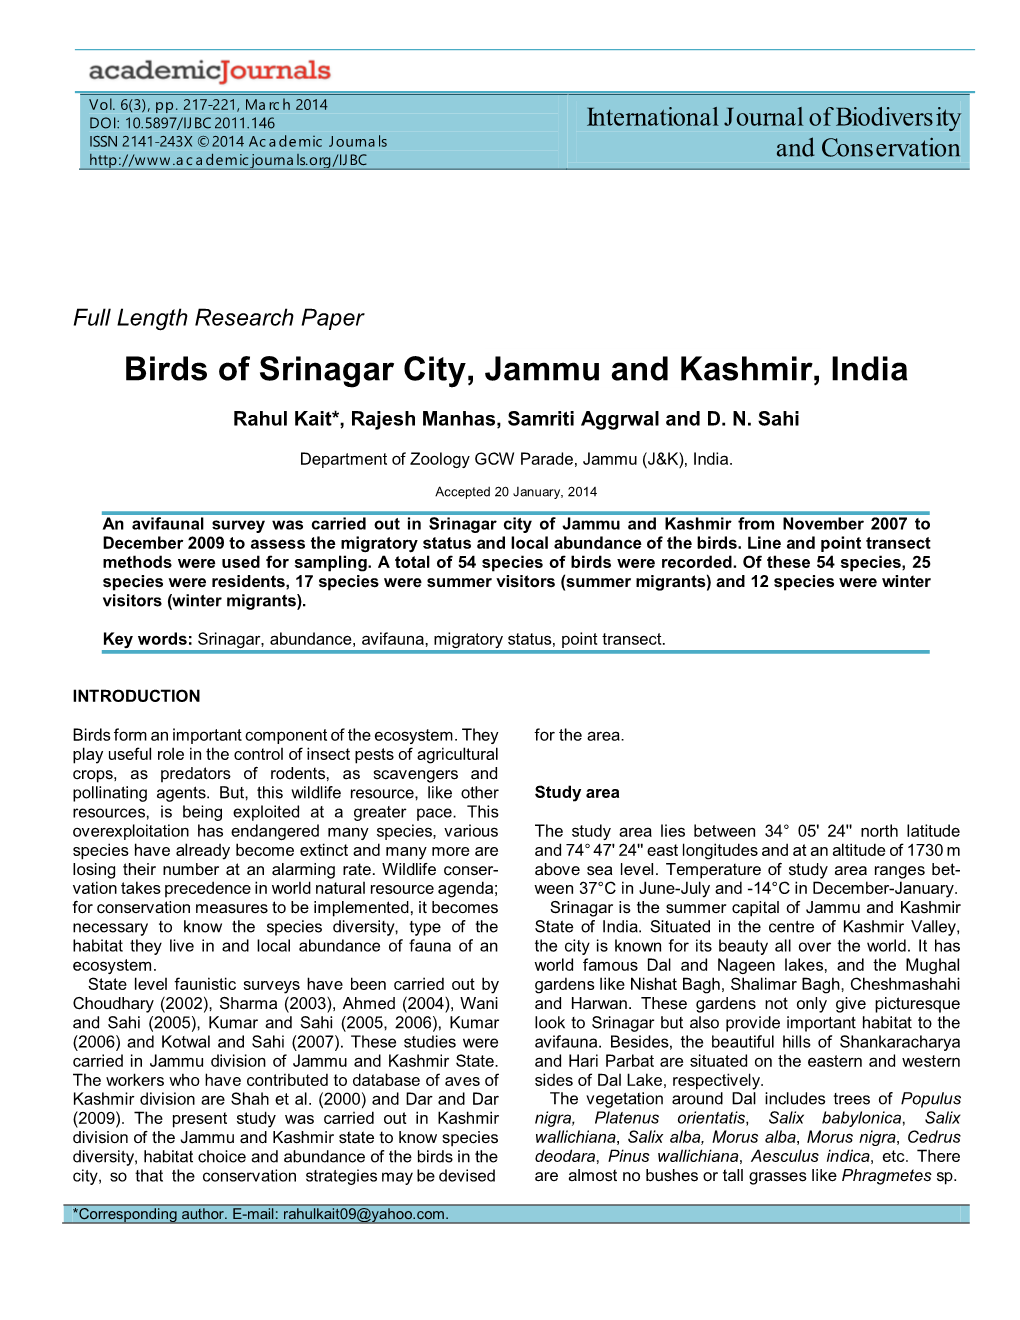 Birds of Srinagar City, Jammu and Kashmir, India